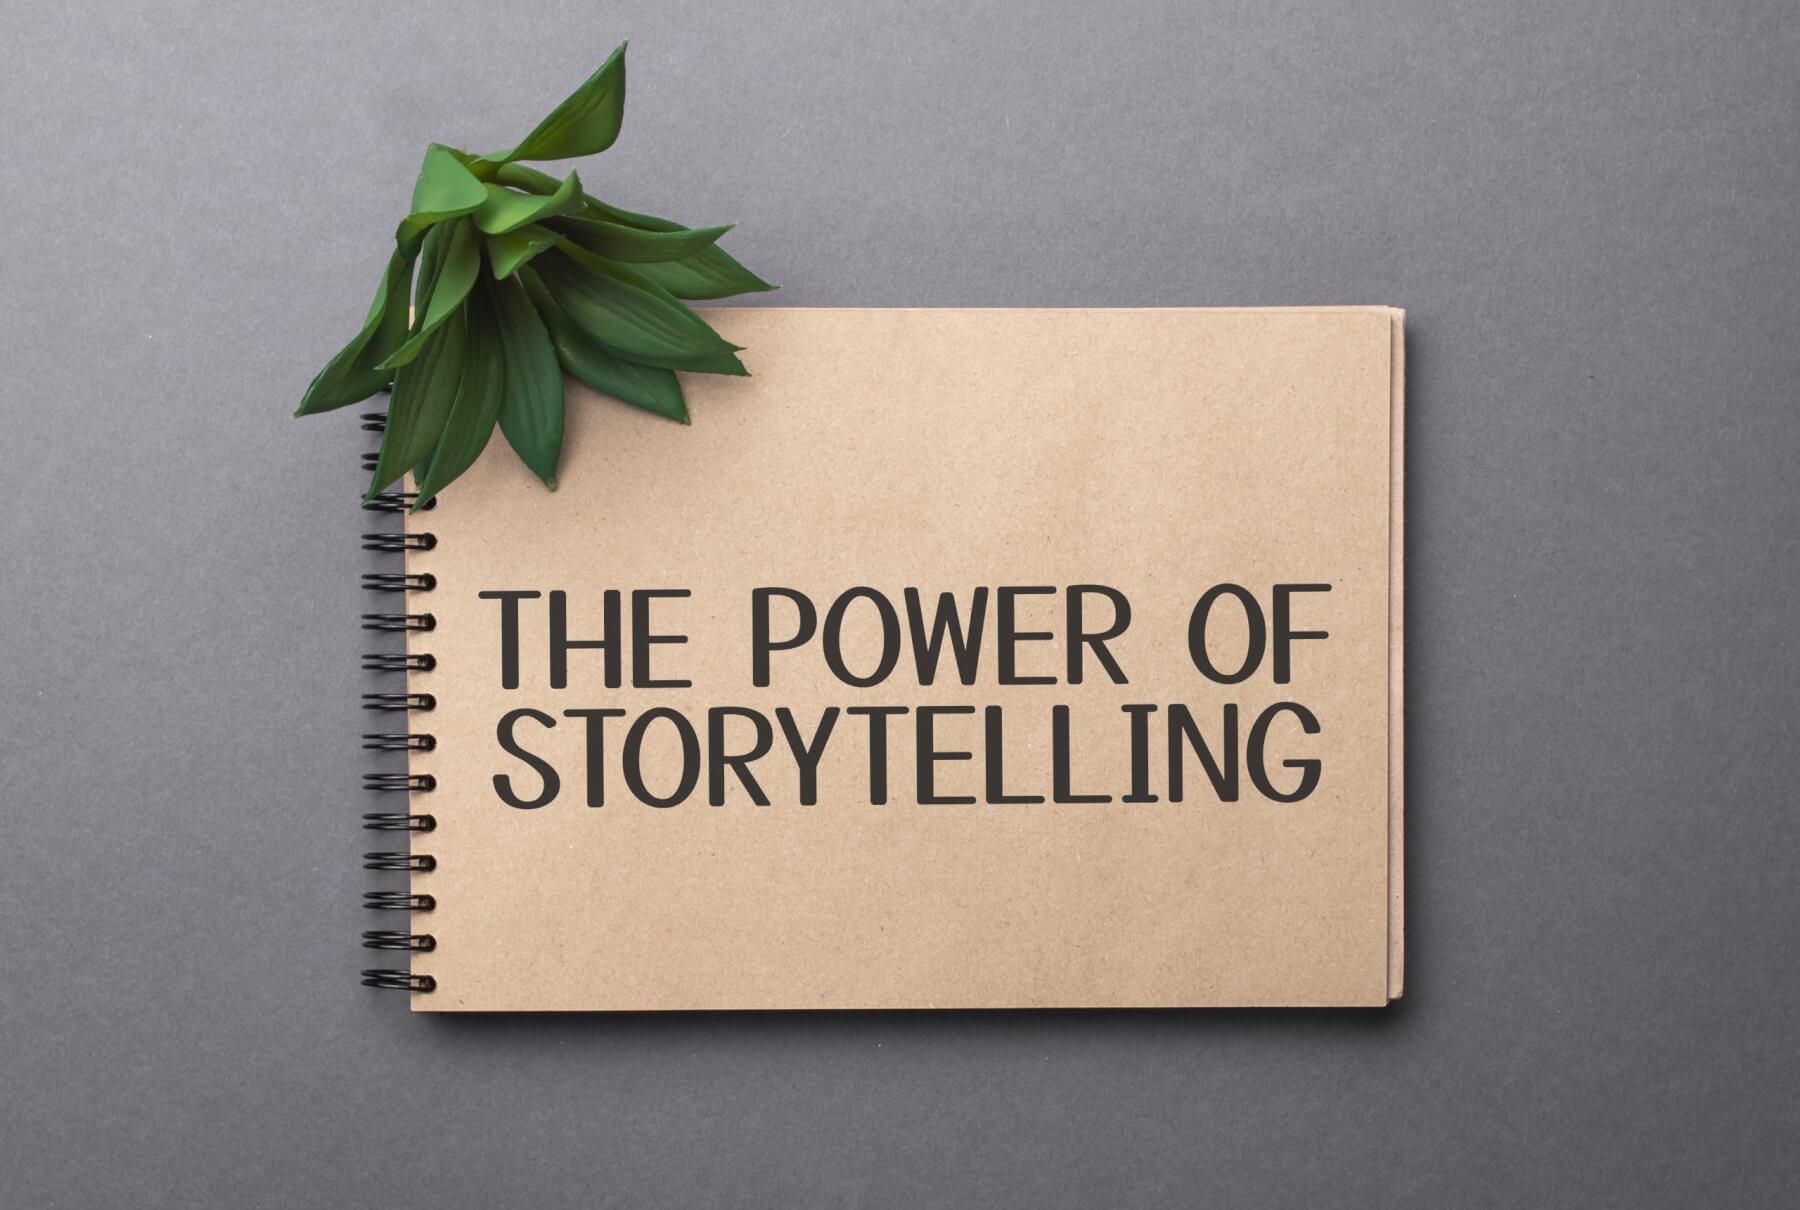 atrae-clientes-marca-storytelling